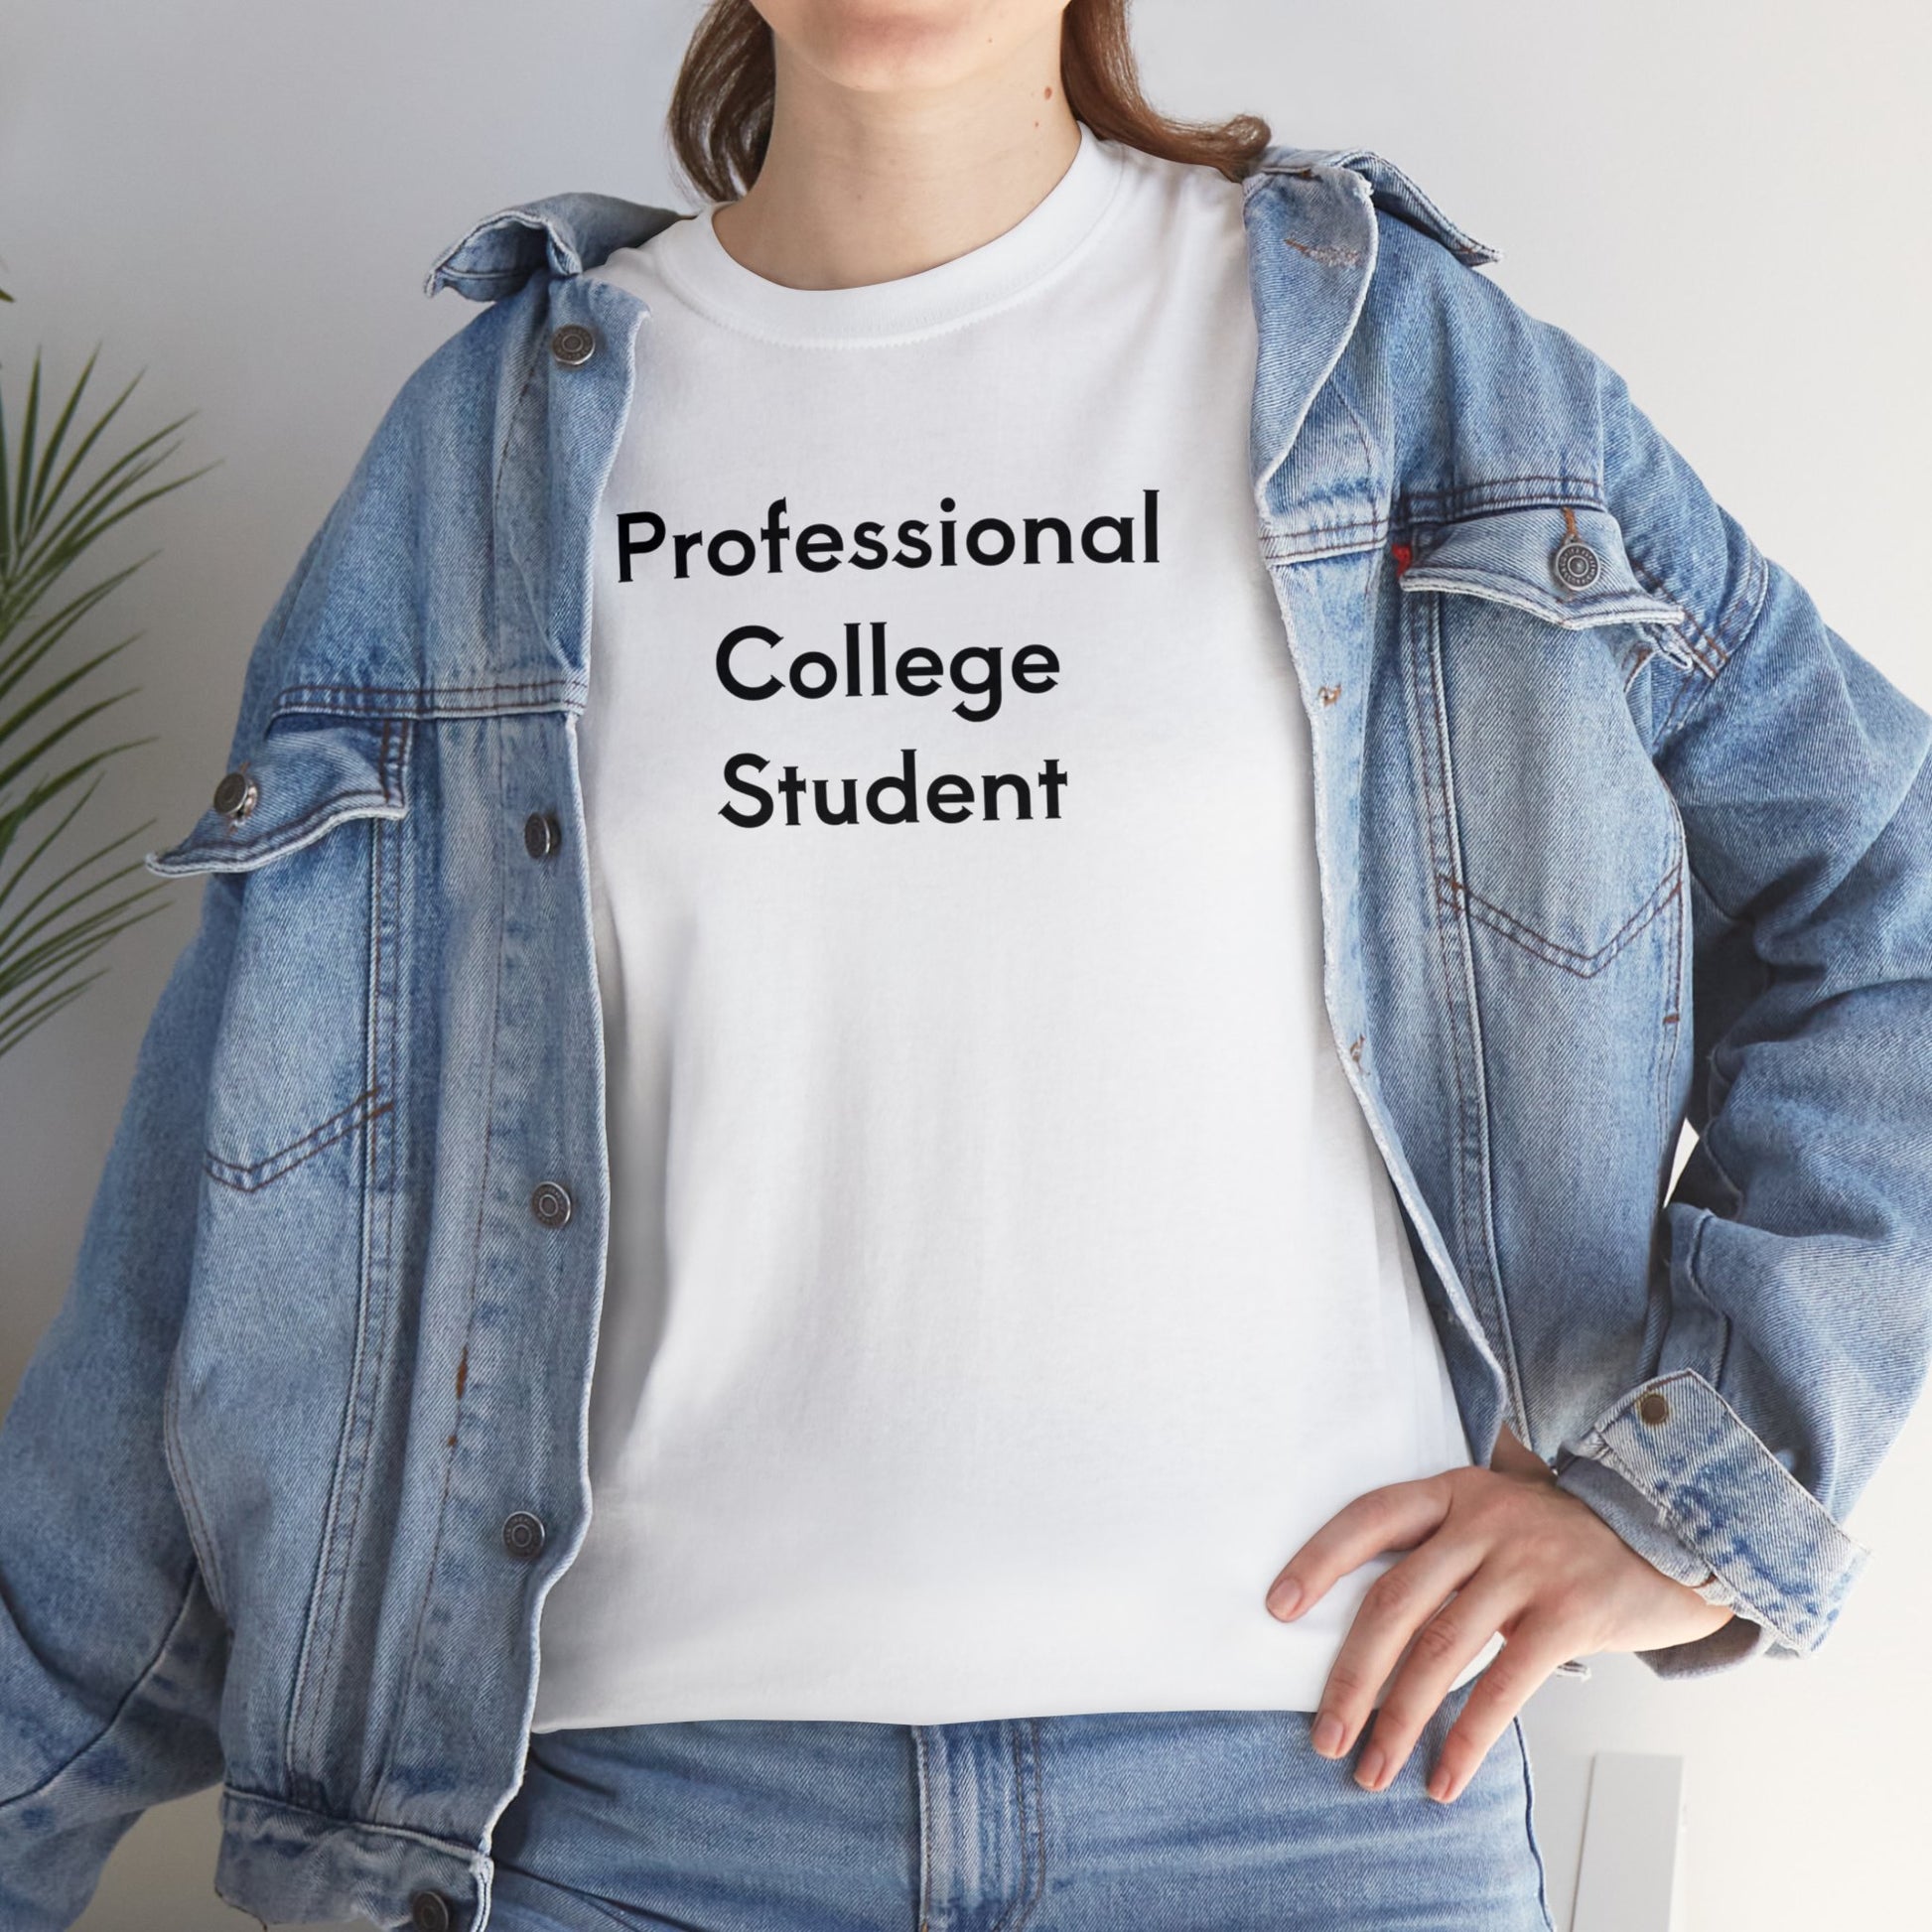 "Pro-College Student" Tee